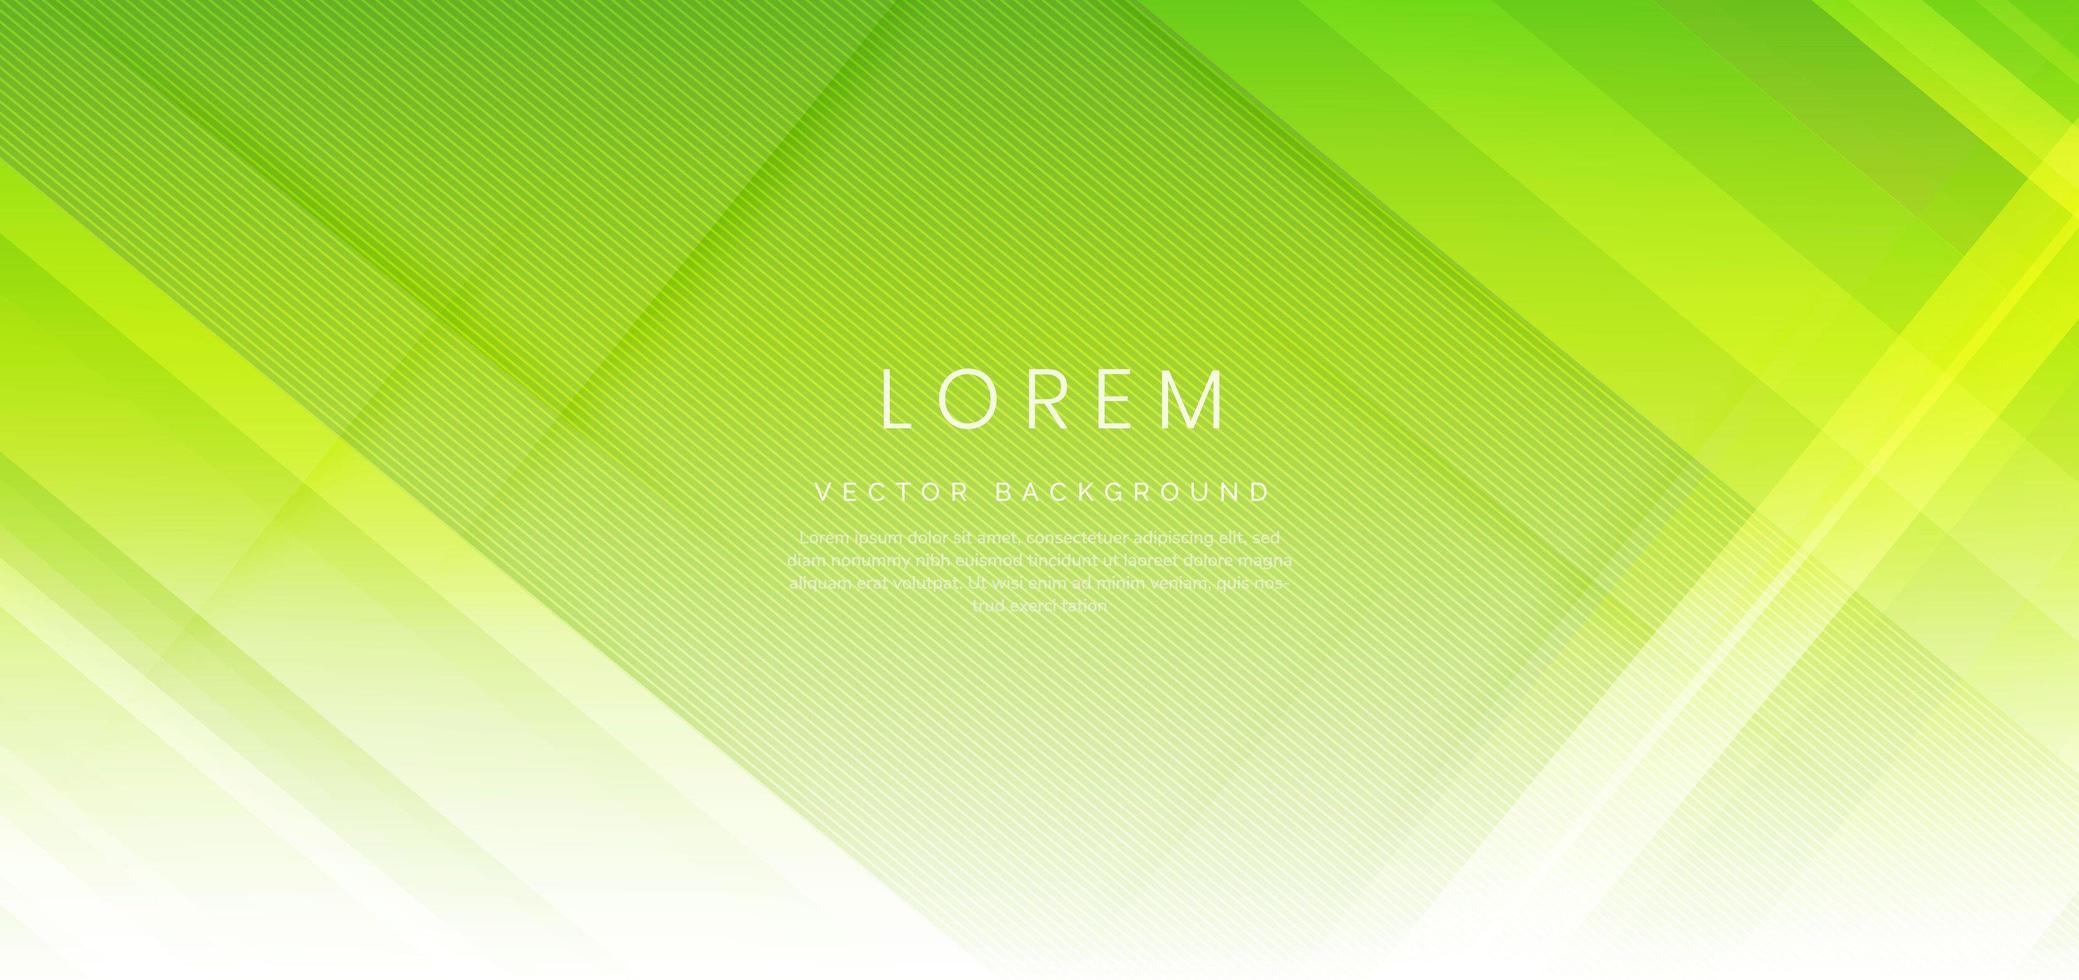 abstracte zachte groene kleurovergang geometrische diagonale overlay laag achtergrond. vector